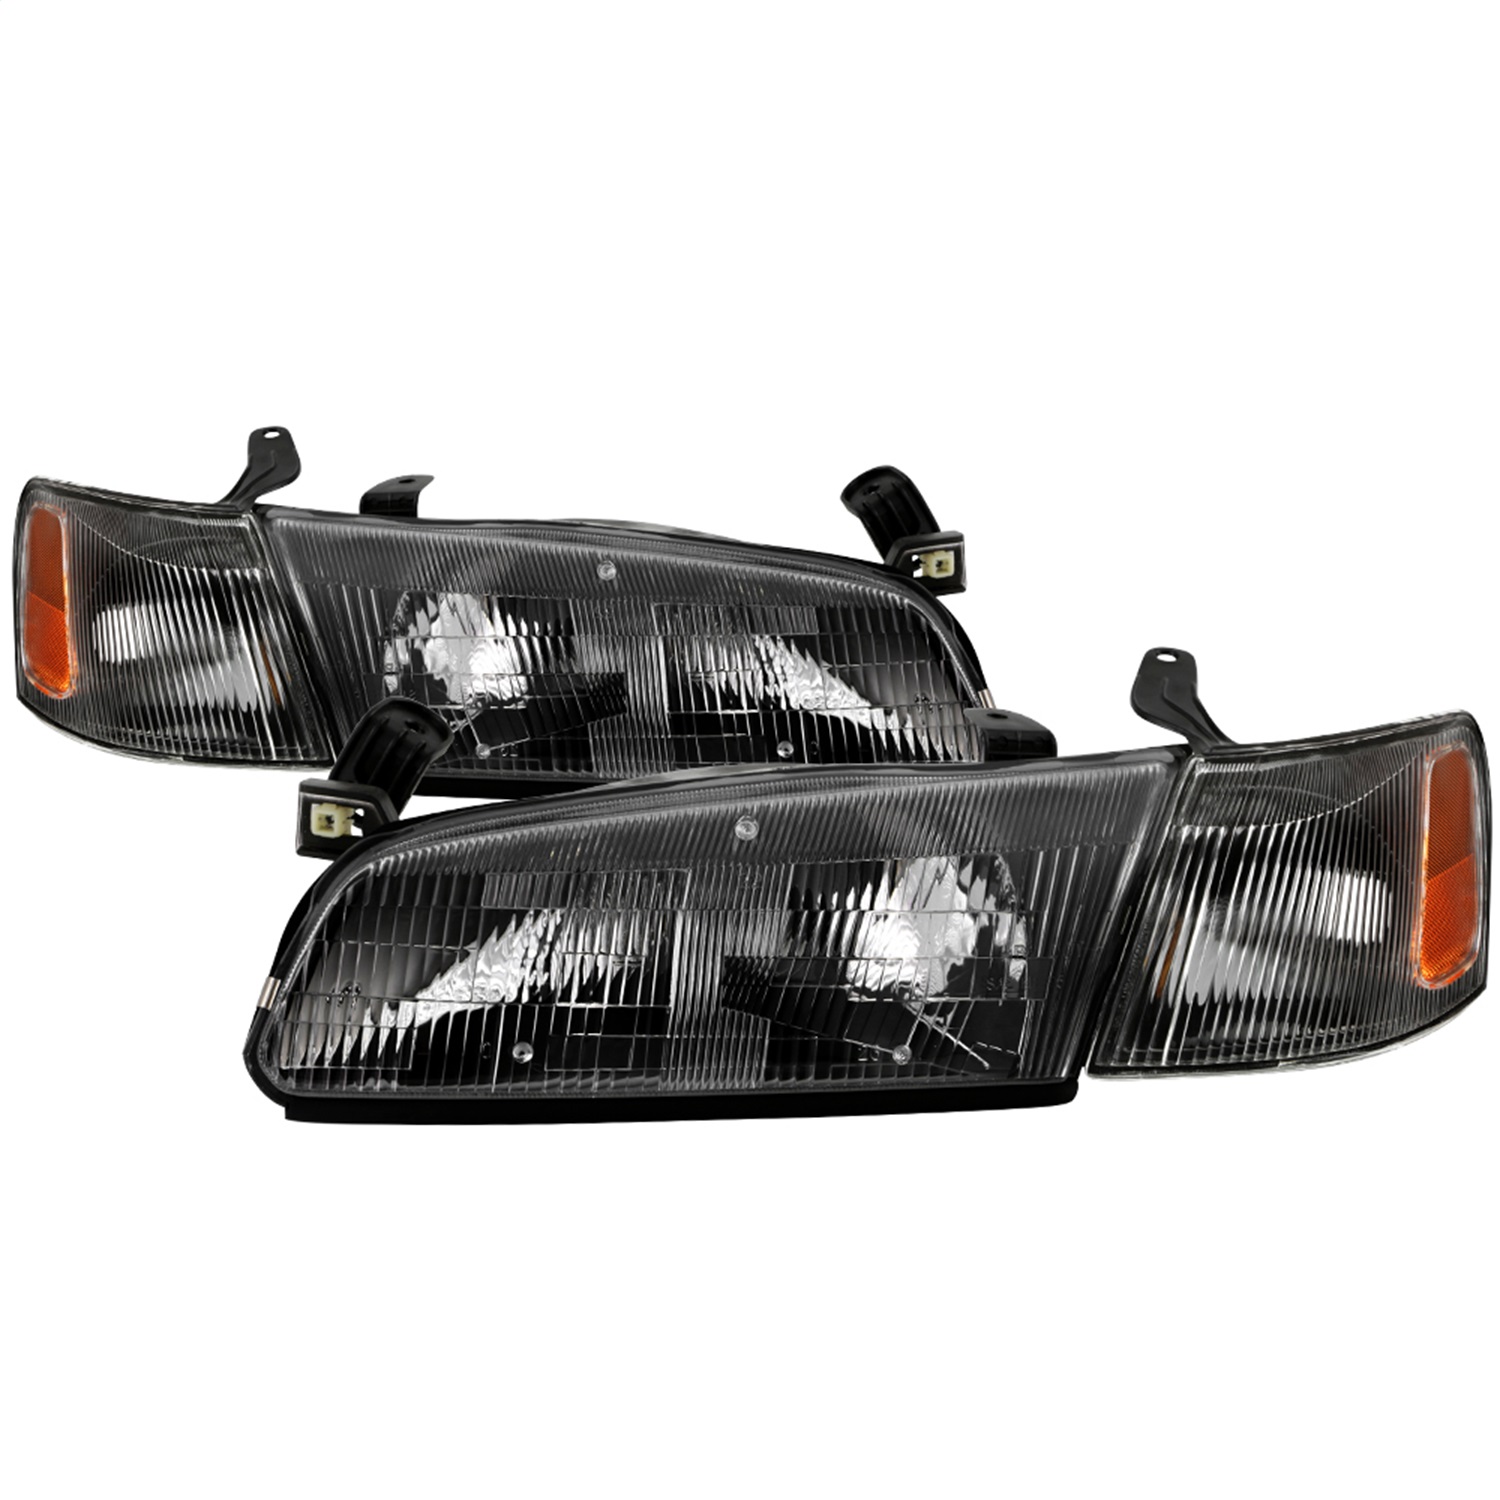 Spyder Auto 9042836 Headlights Fits 97-99 Camry